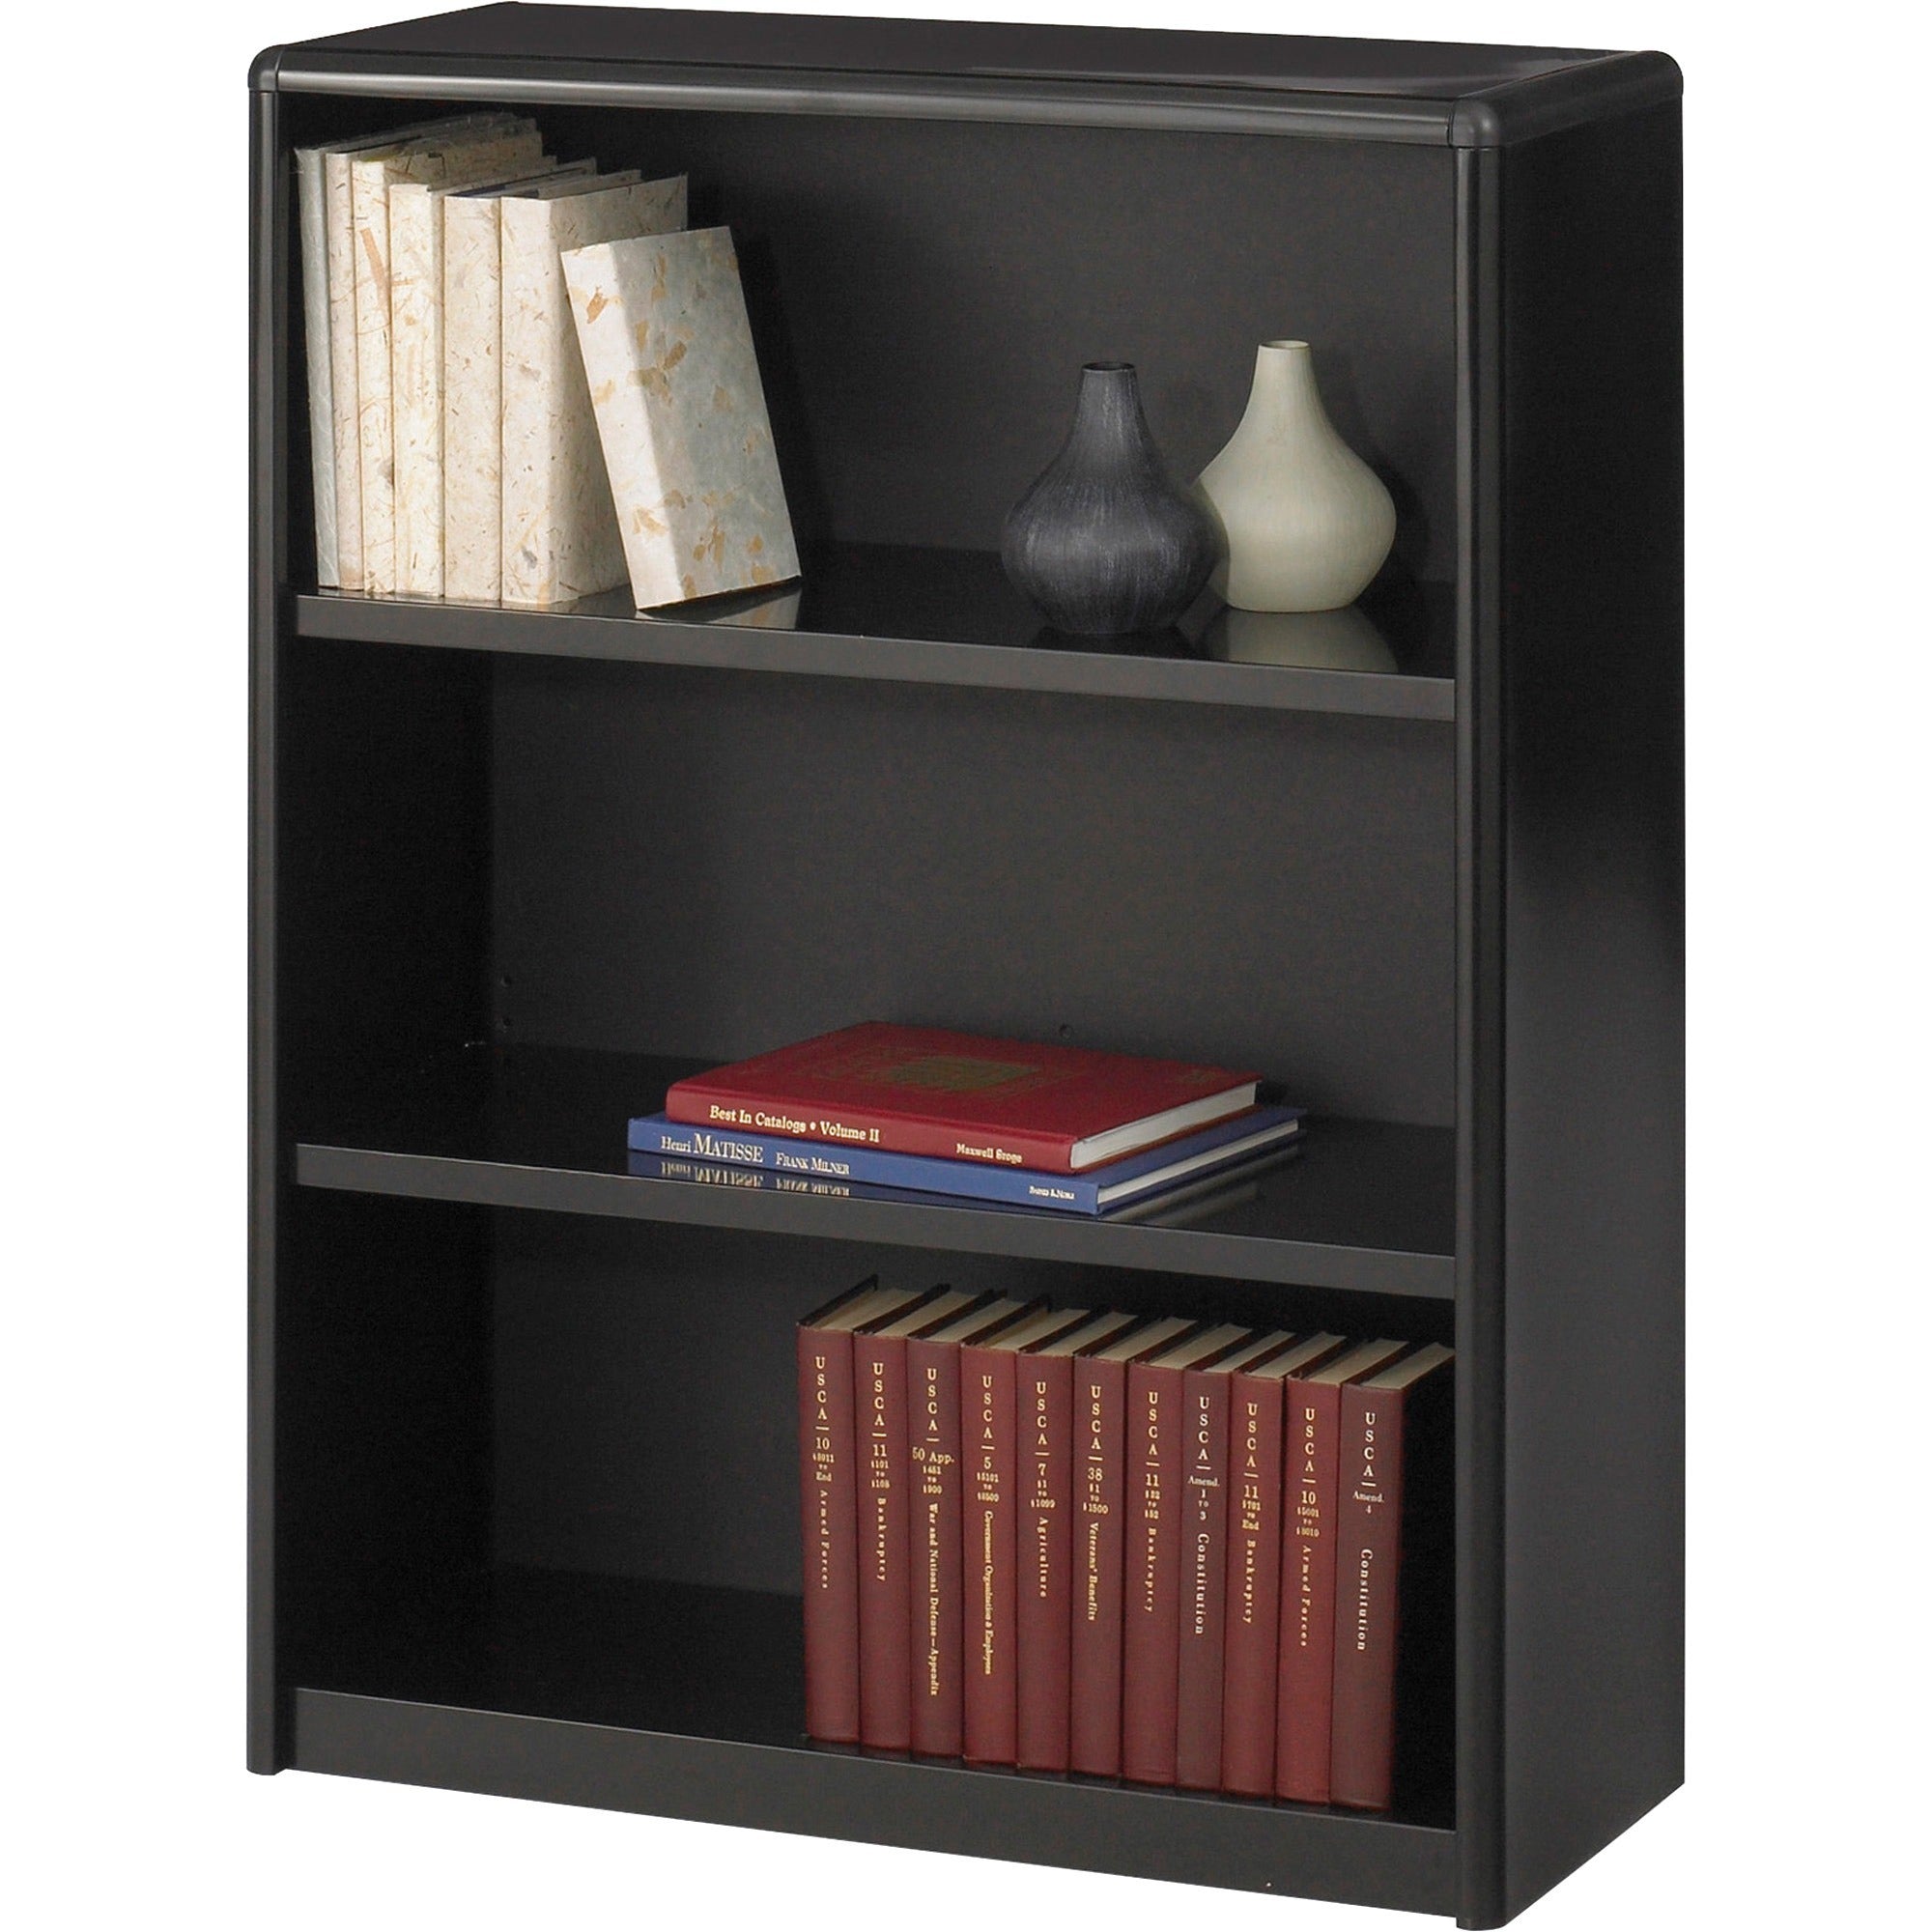 Safco ValueMate Bookcase - 31.8" x 13.5" x 41" - 3 x Shelf(ves) - Black - Steel, Fiberboard, Plastic - Assembly Required - 